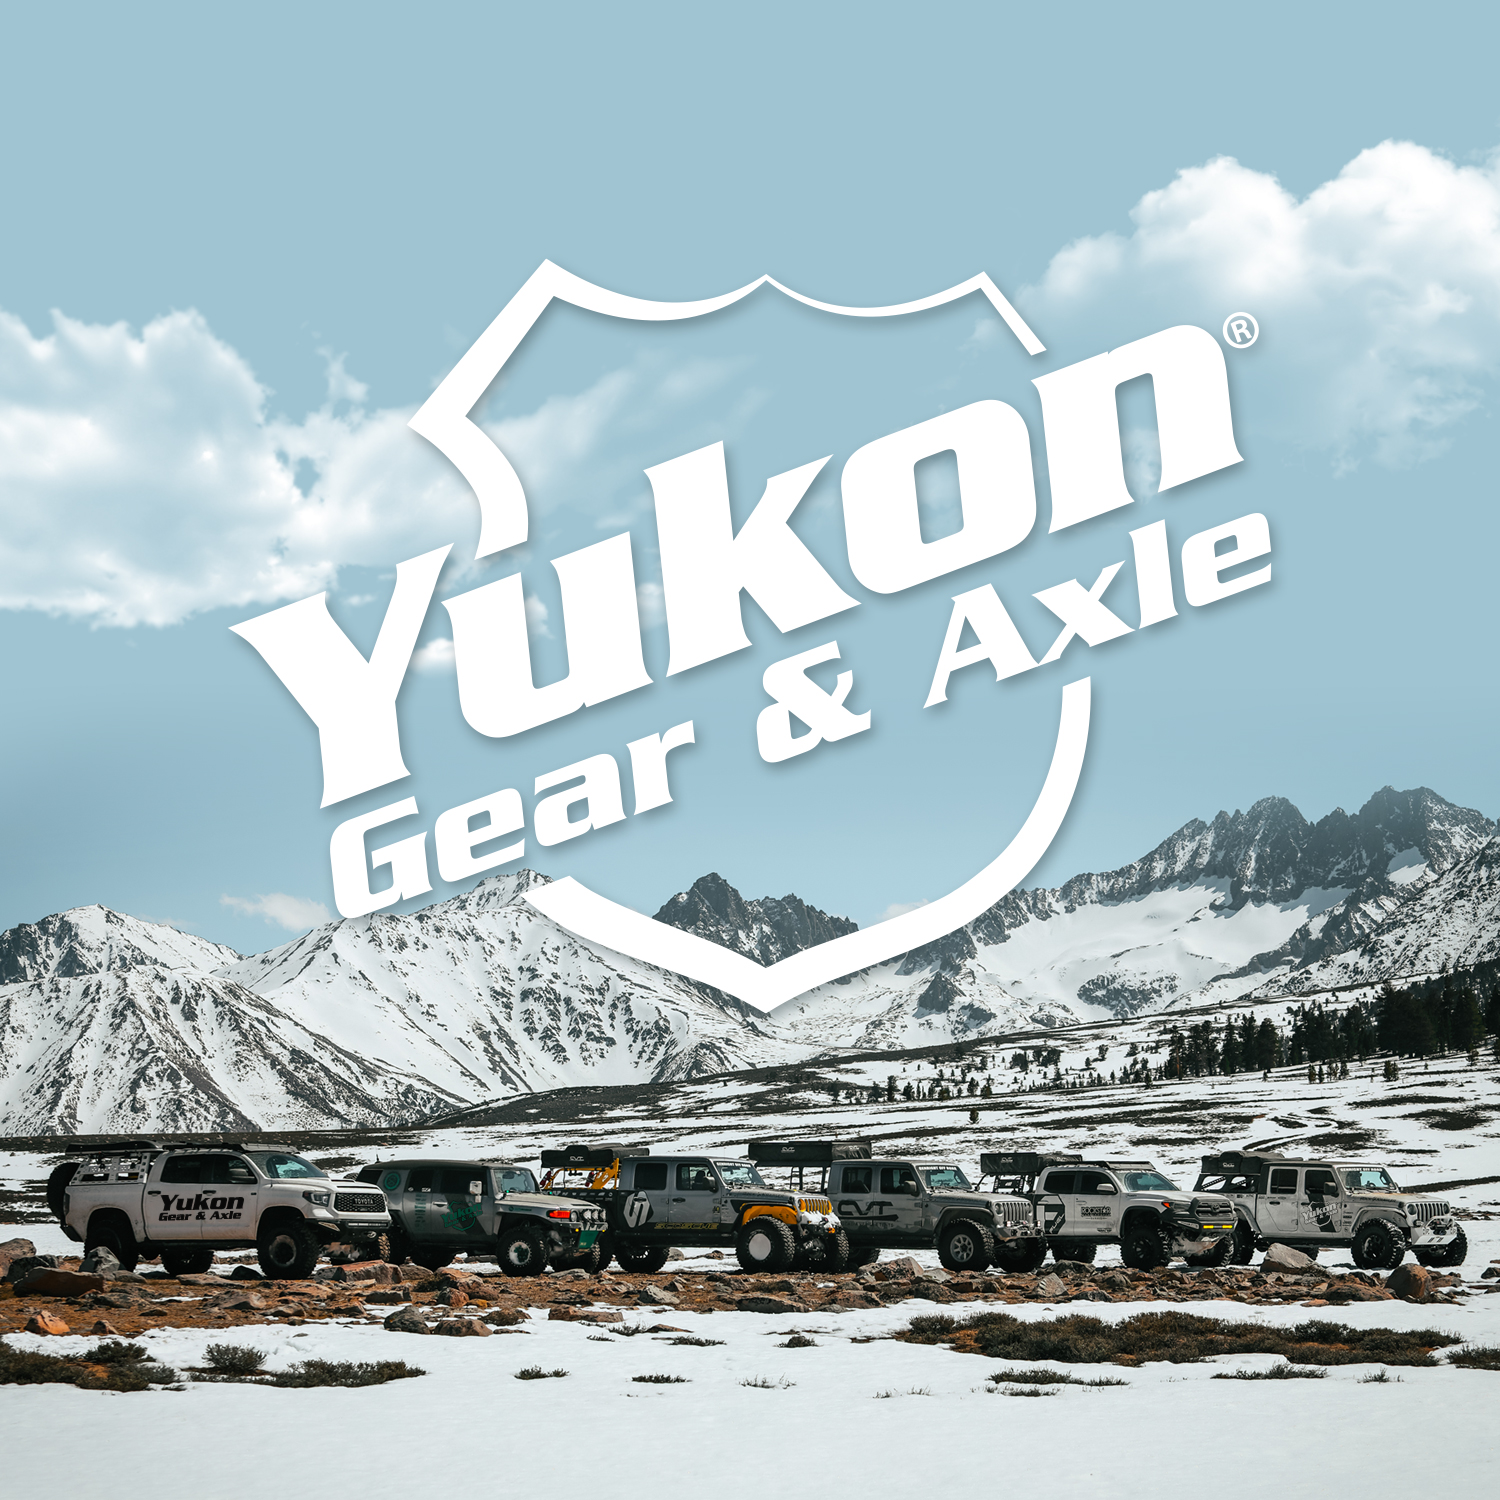 Yukon high performance ring & pinion gear set, GM 7.5”, thick, 4.11 ratio 